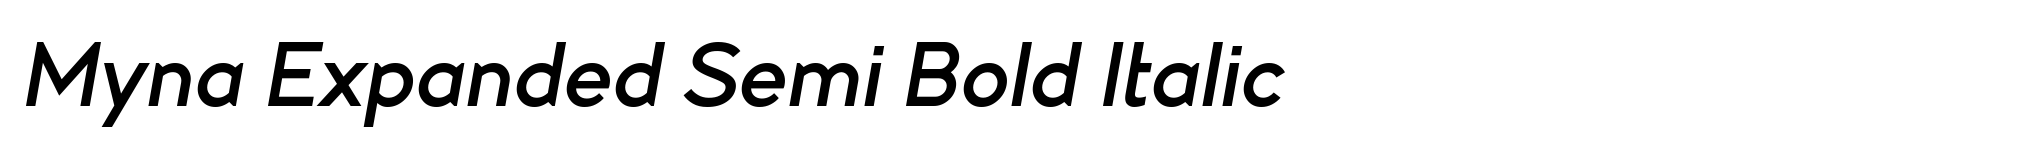 Myna Expanded Semi Bold Italic image